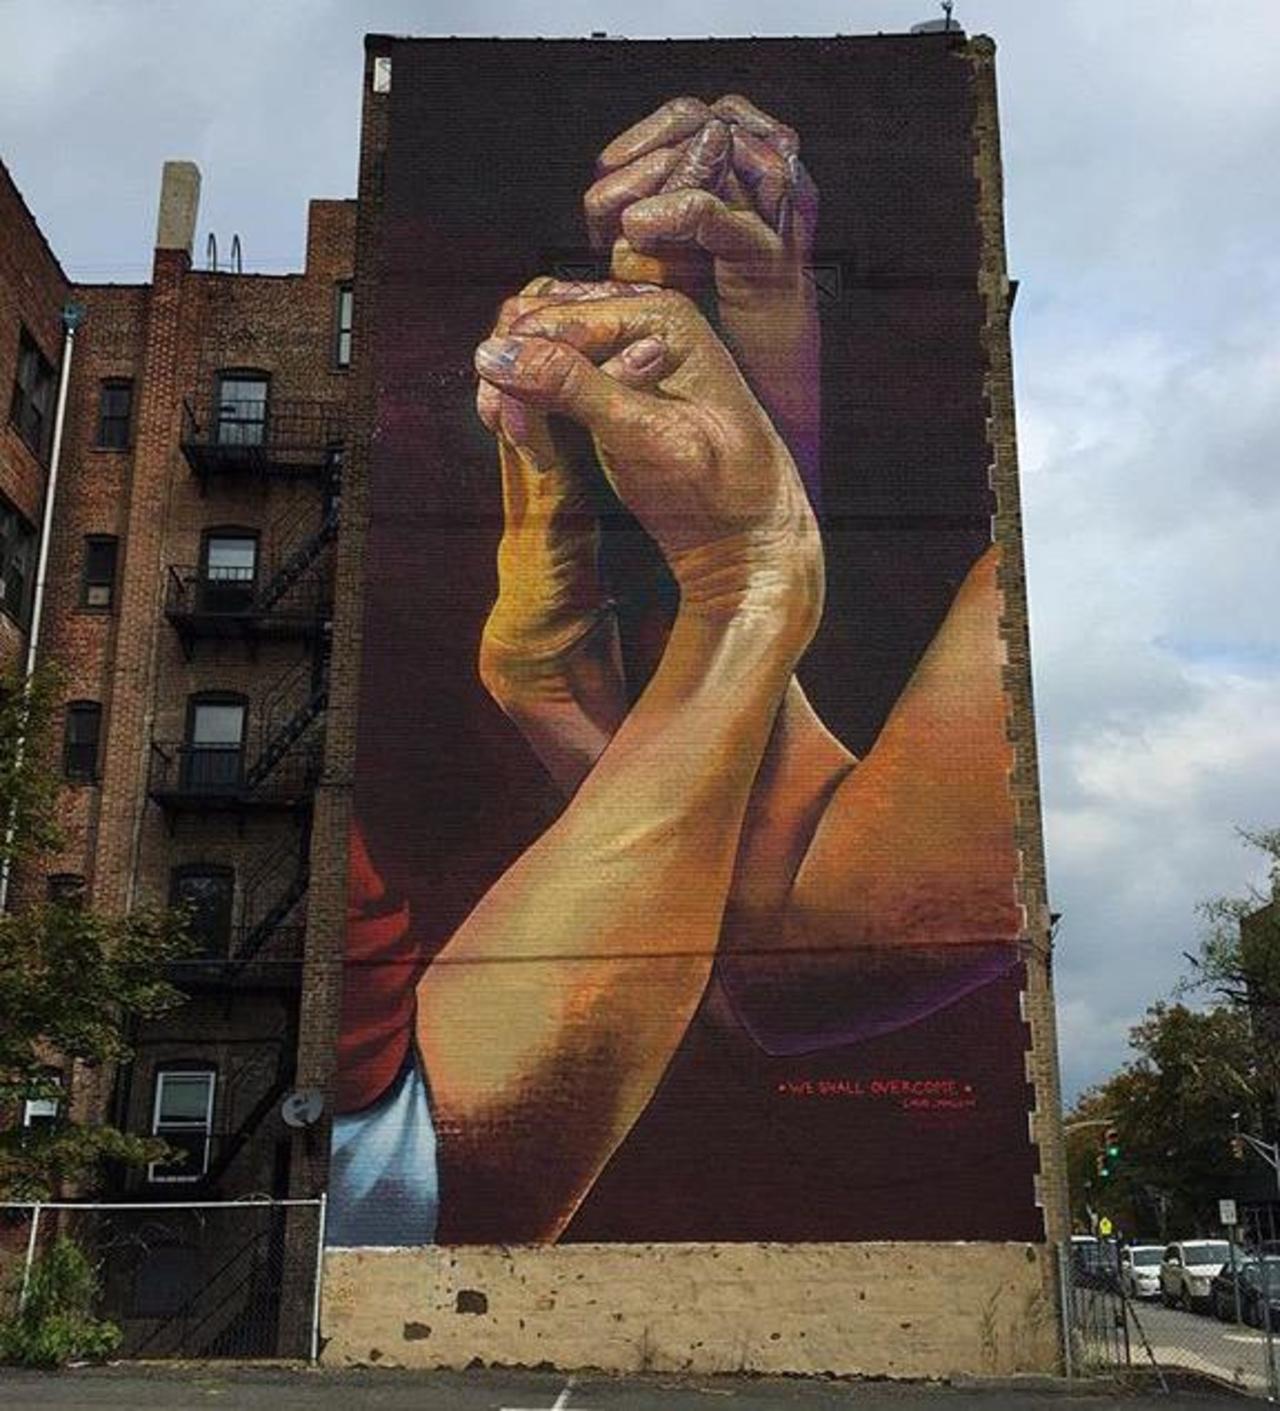 New Street Art by CaseMaclaim in Jersey City for the TheBKcollective 

#art #graffiti #mural #streetart http://t.co/JKkb4n3b2T